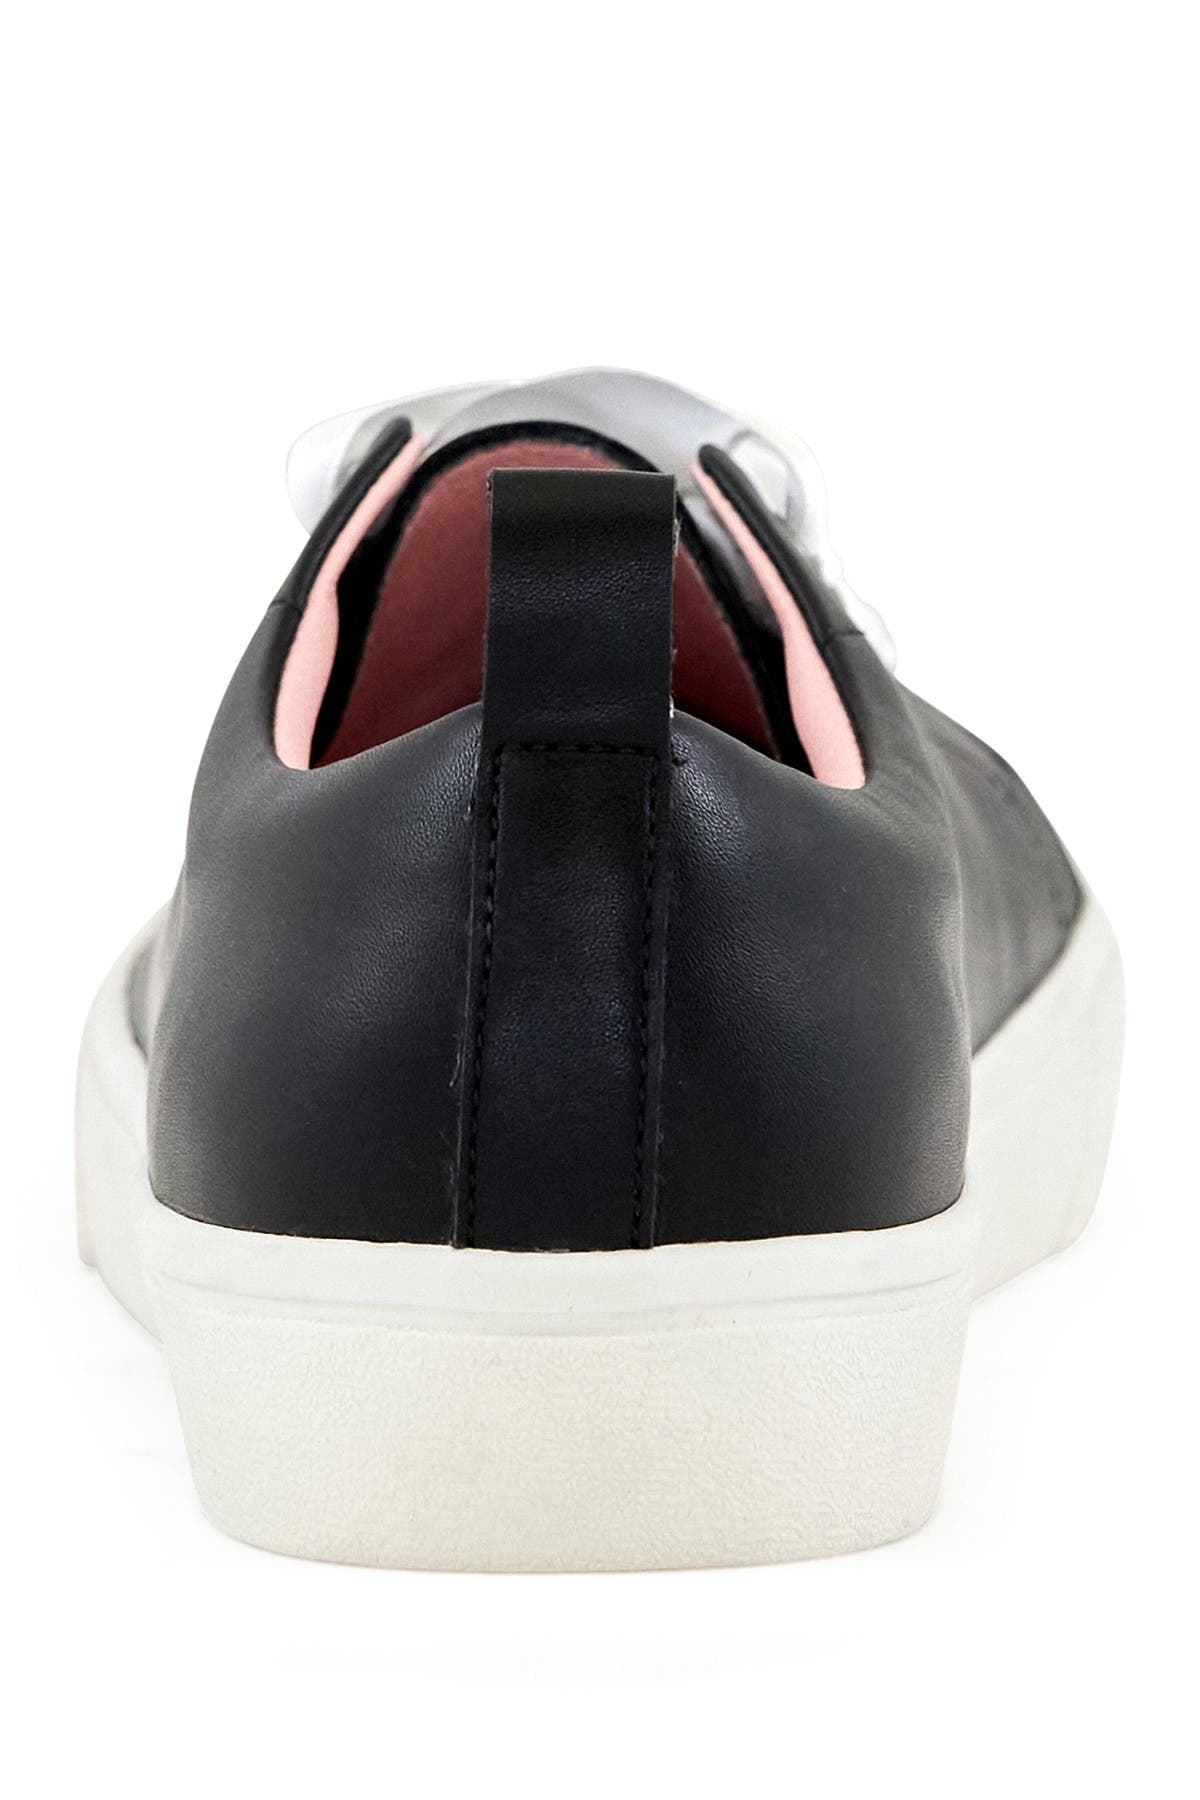 Nest Footwear Vancouver Classic Sneaker In Black